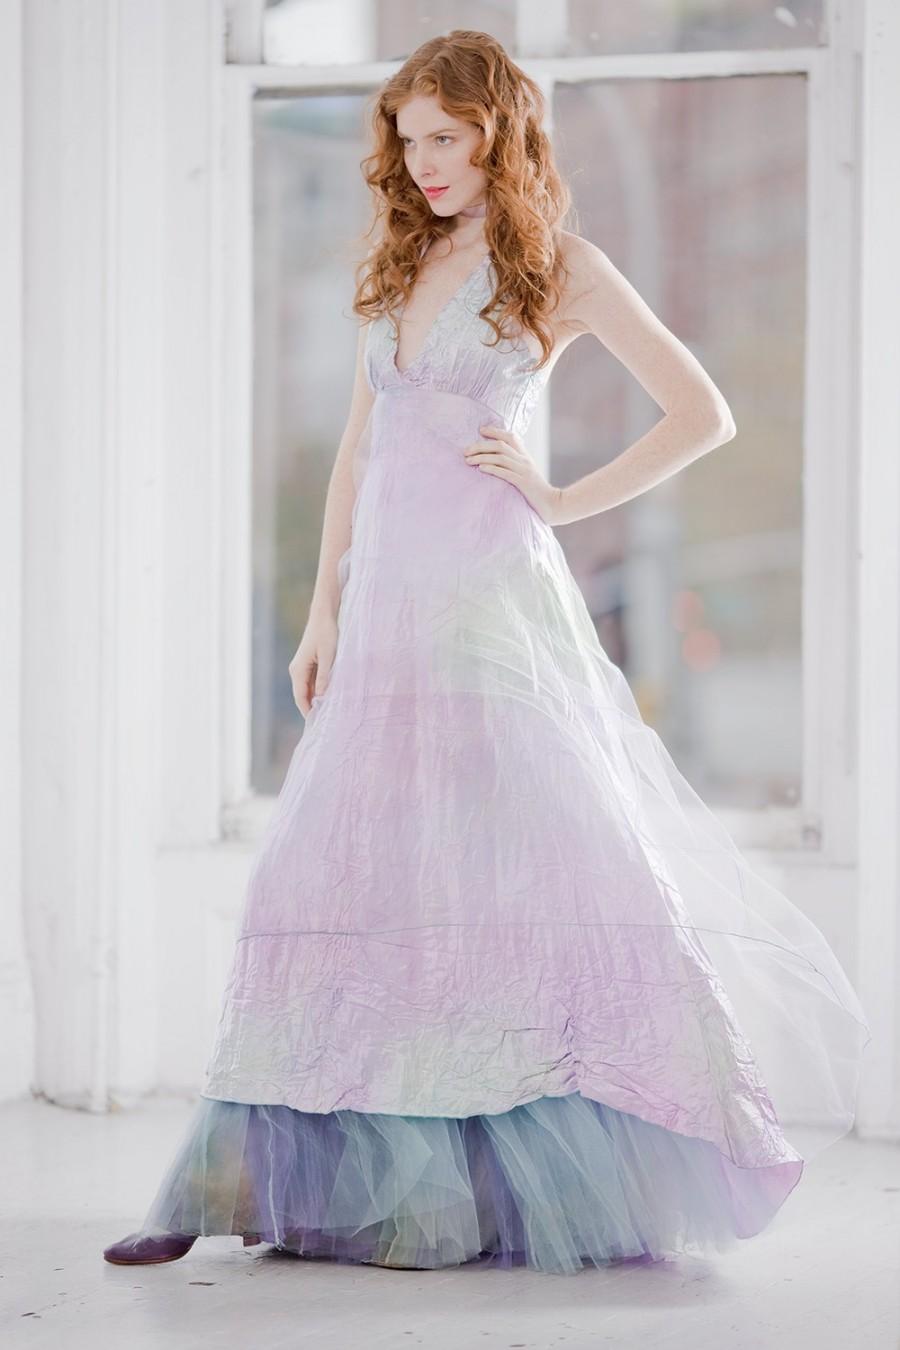 زفاف - Small Opalescent halter wedding dress  dress with tuille overlay and train custom order for your wedding boho bridesmaids beach bridal gown